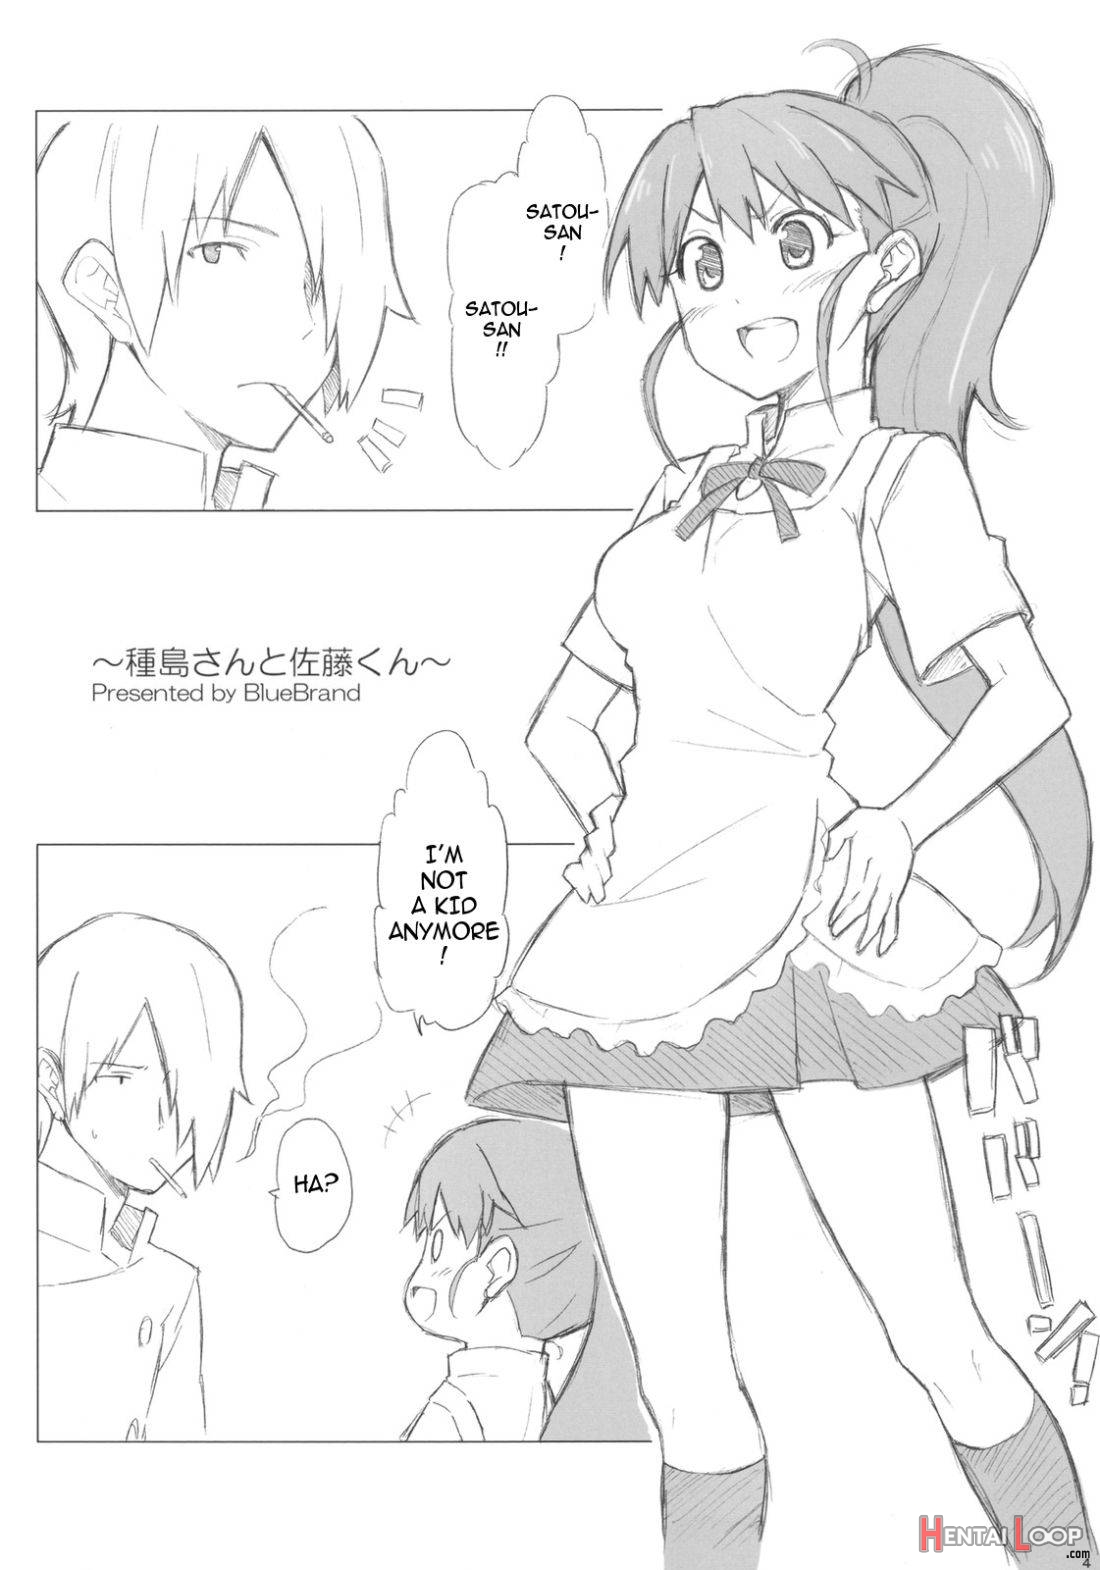 Taneshima-san to Satou-kun page 2